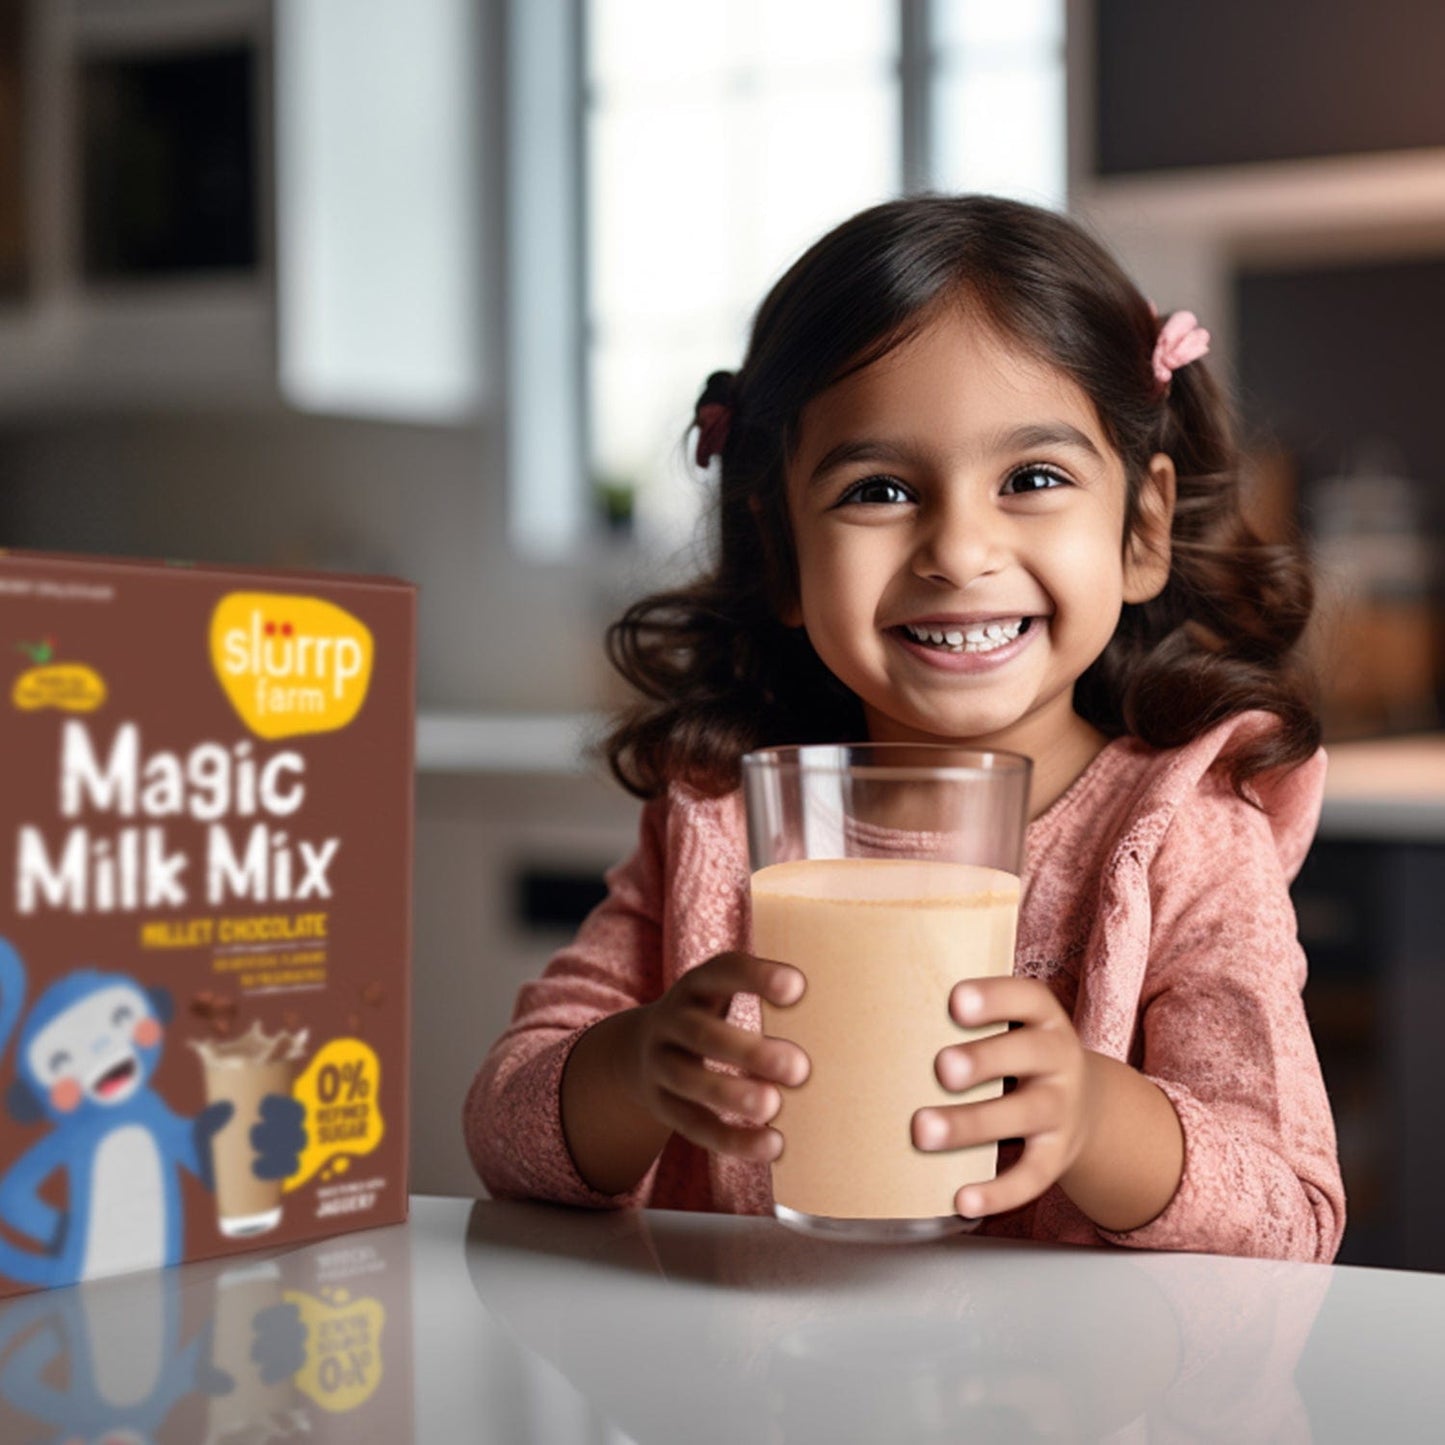 Magic Milk Mix - Millet Chocolate